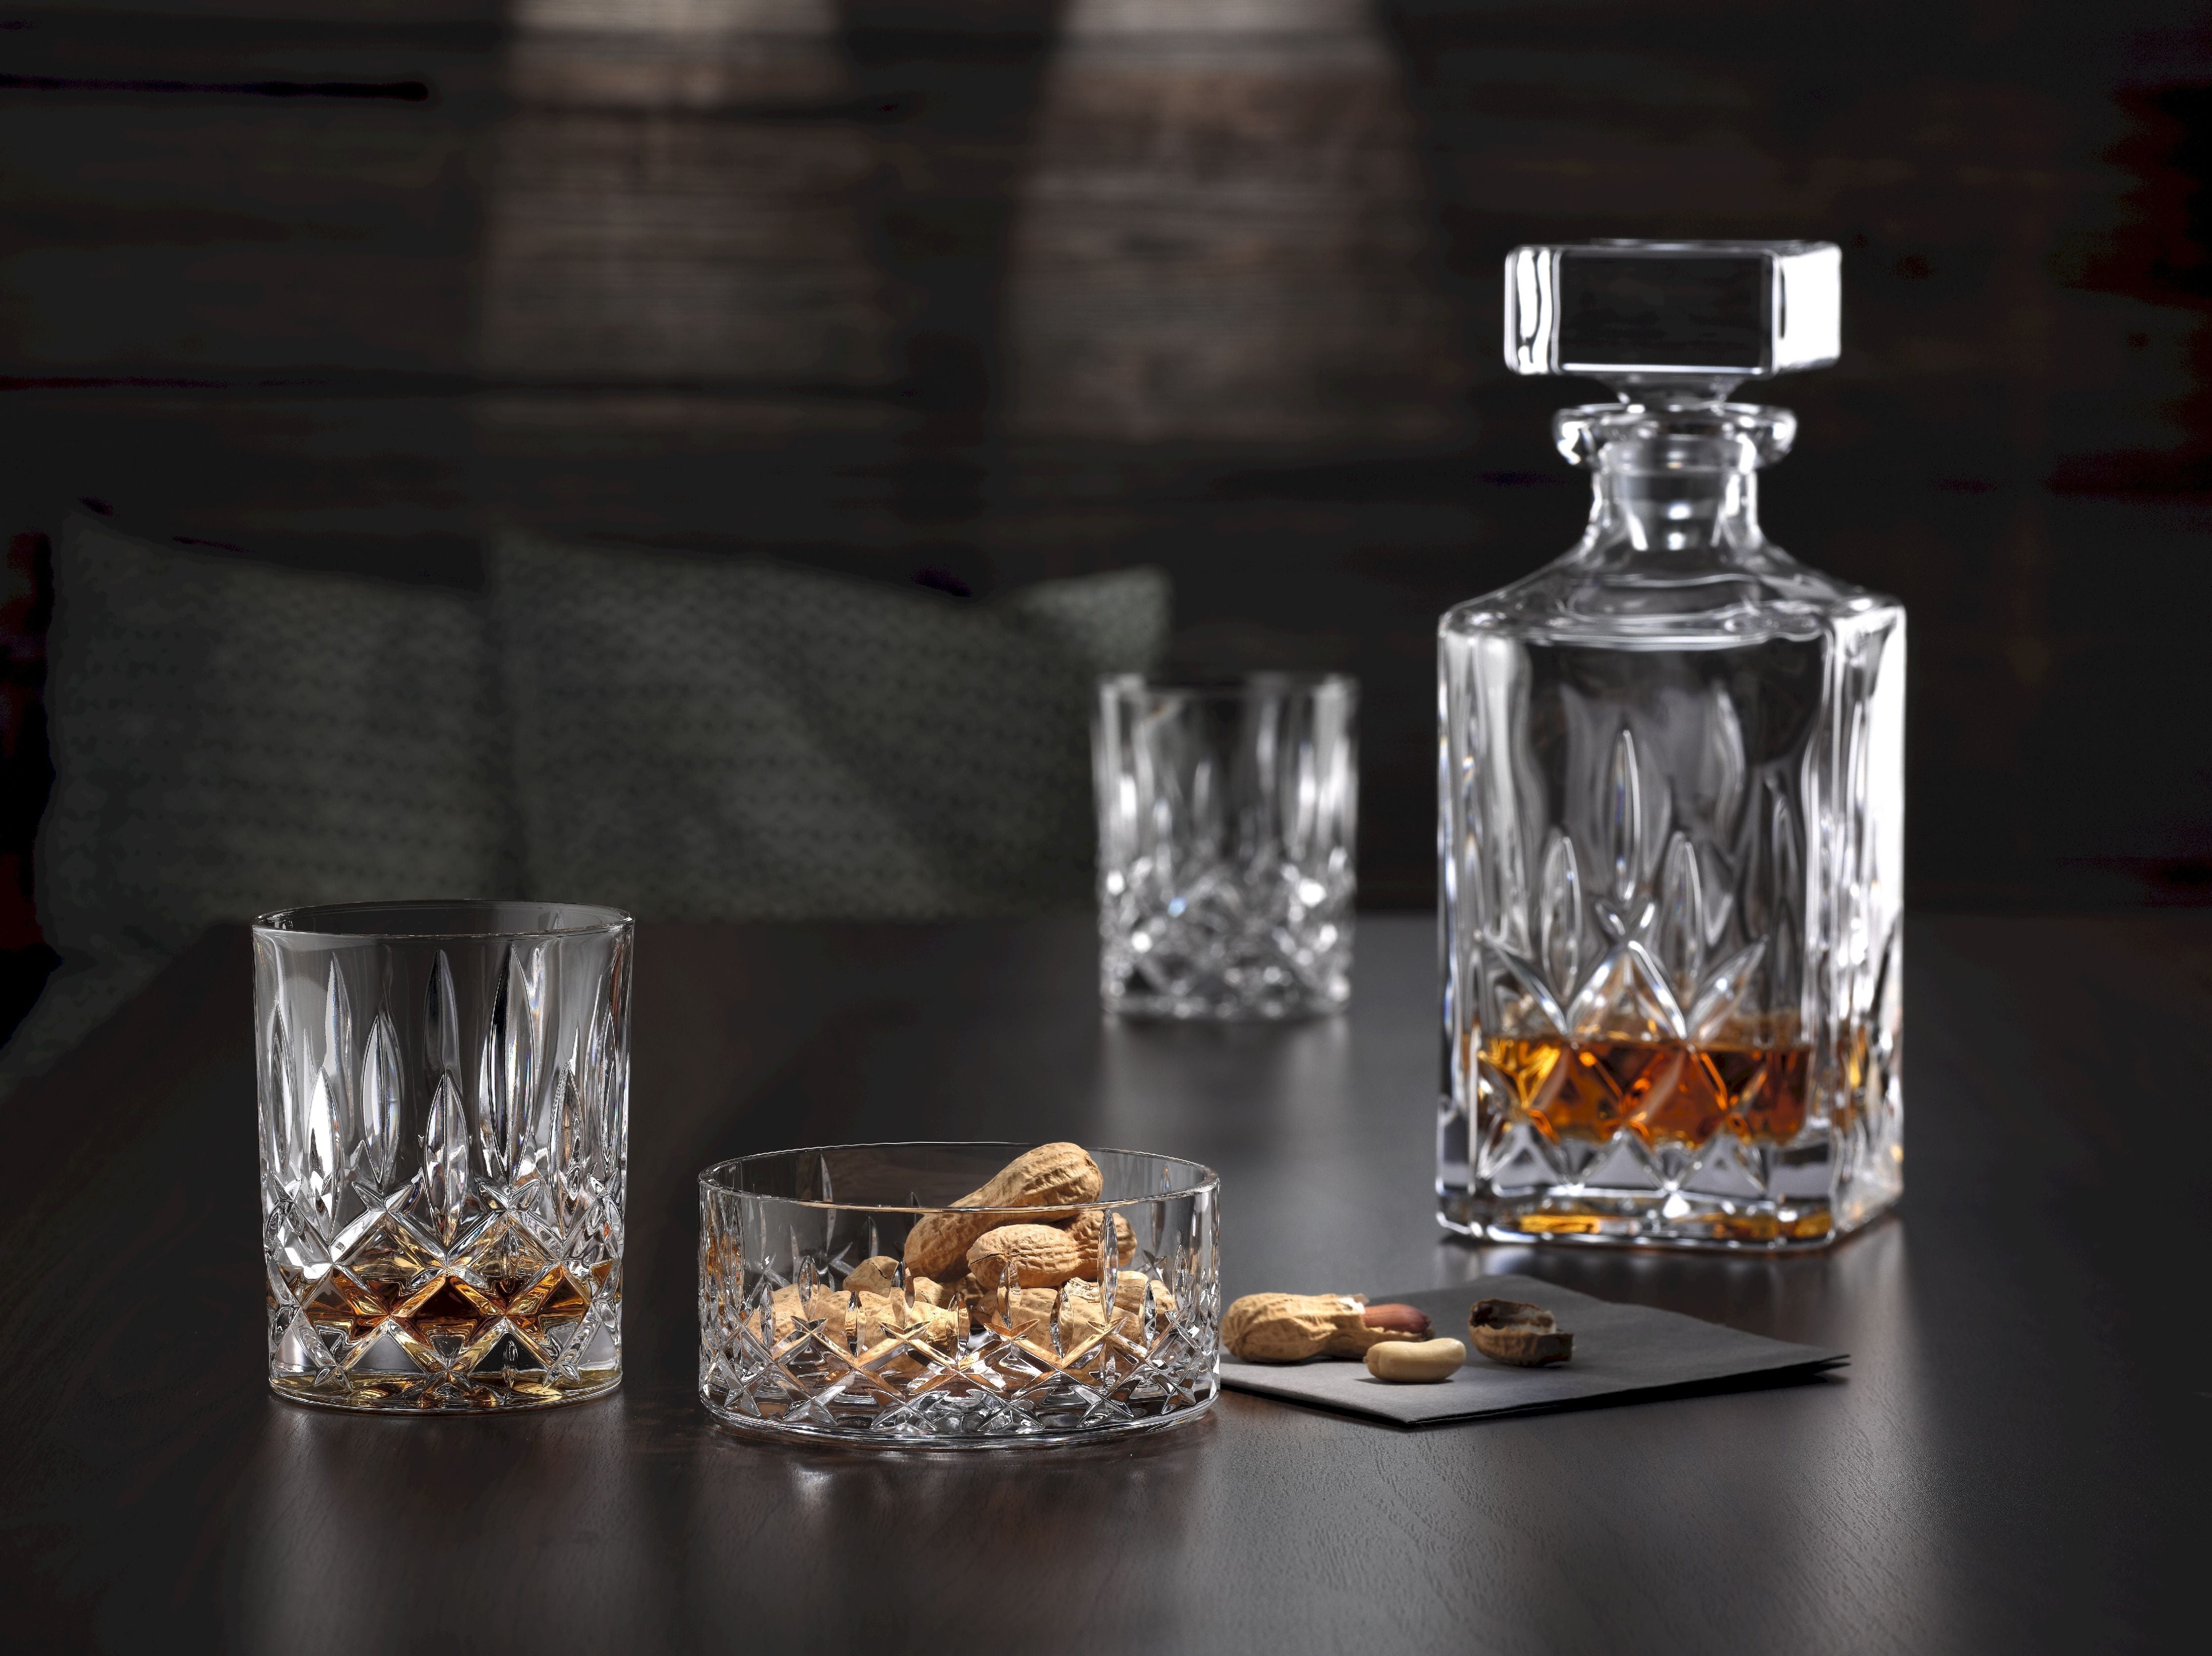 Nachtmann Noblesse Whisky Glass 295 Ml, Set Of 4